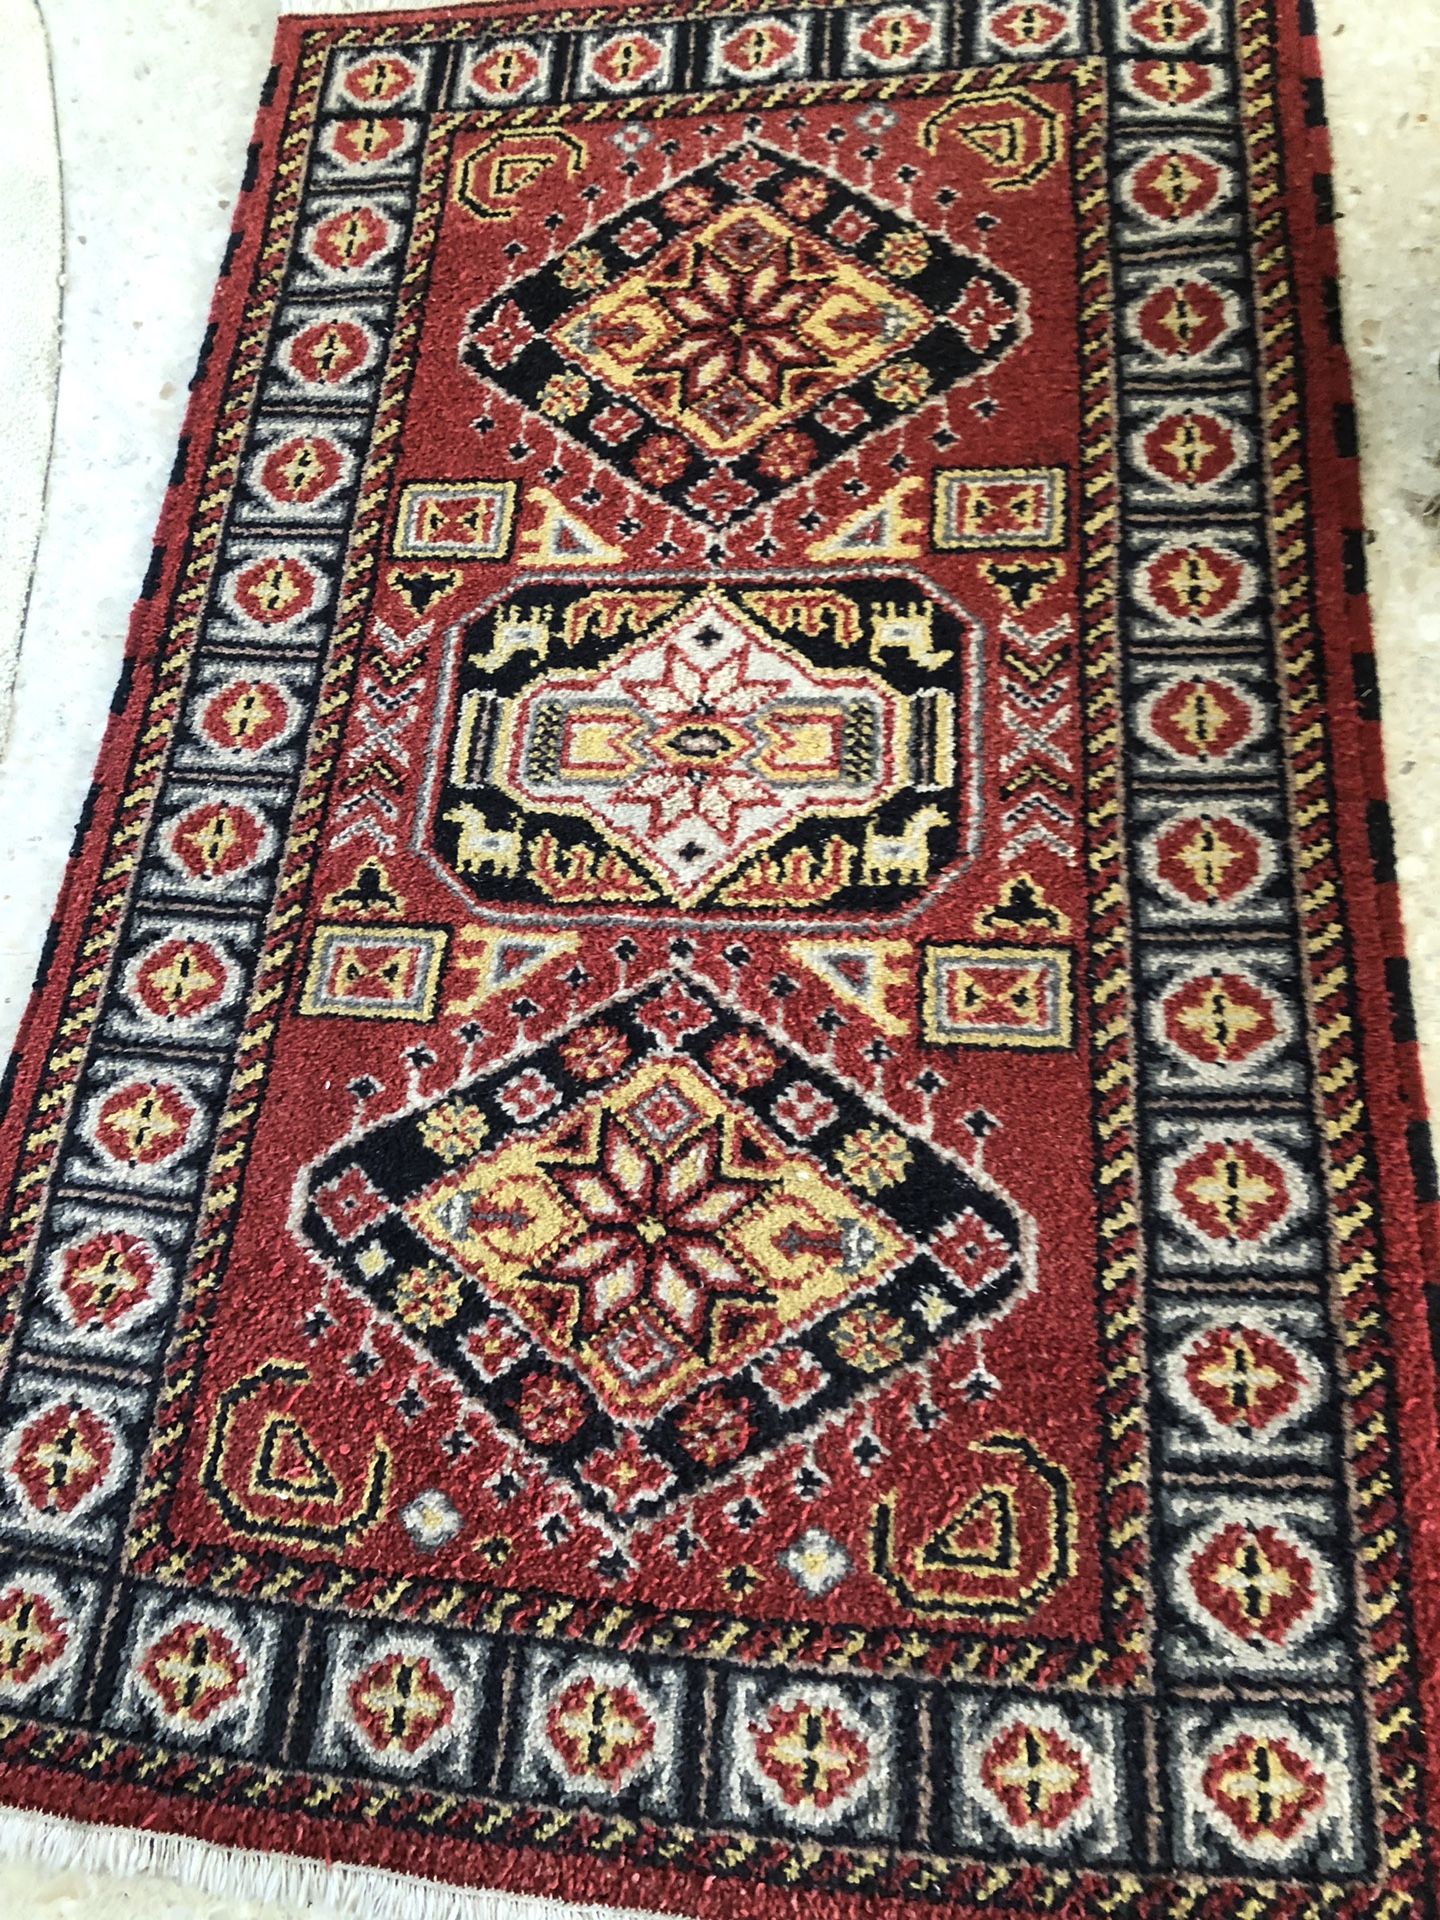 3’x5’ wool oriental small rug. Primarily dark red.